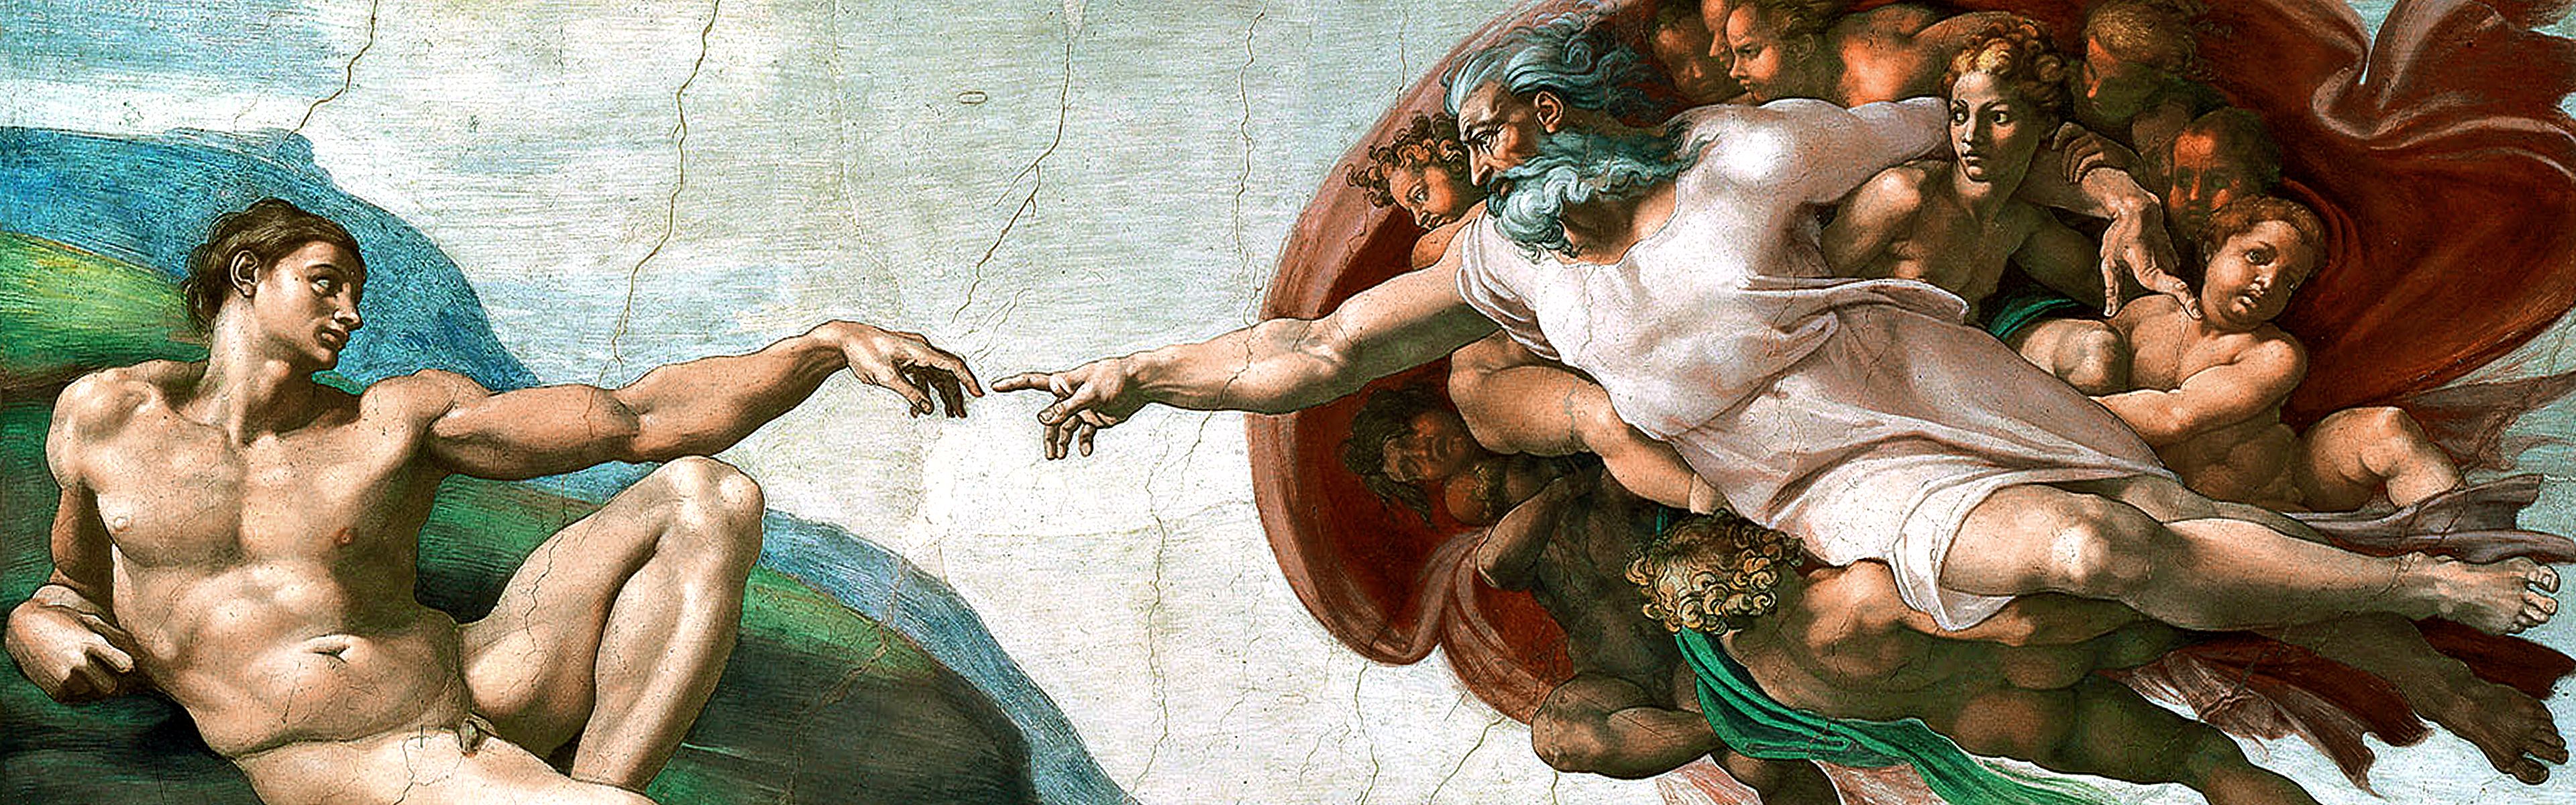 paintings, Michelangelo, The Creation of Adam, Sistine Chapel ...